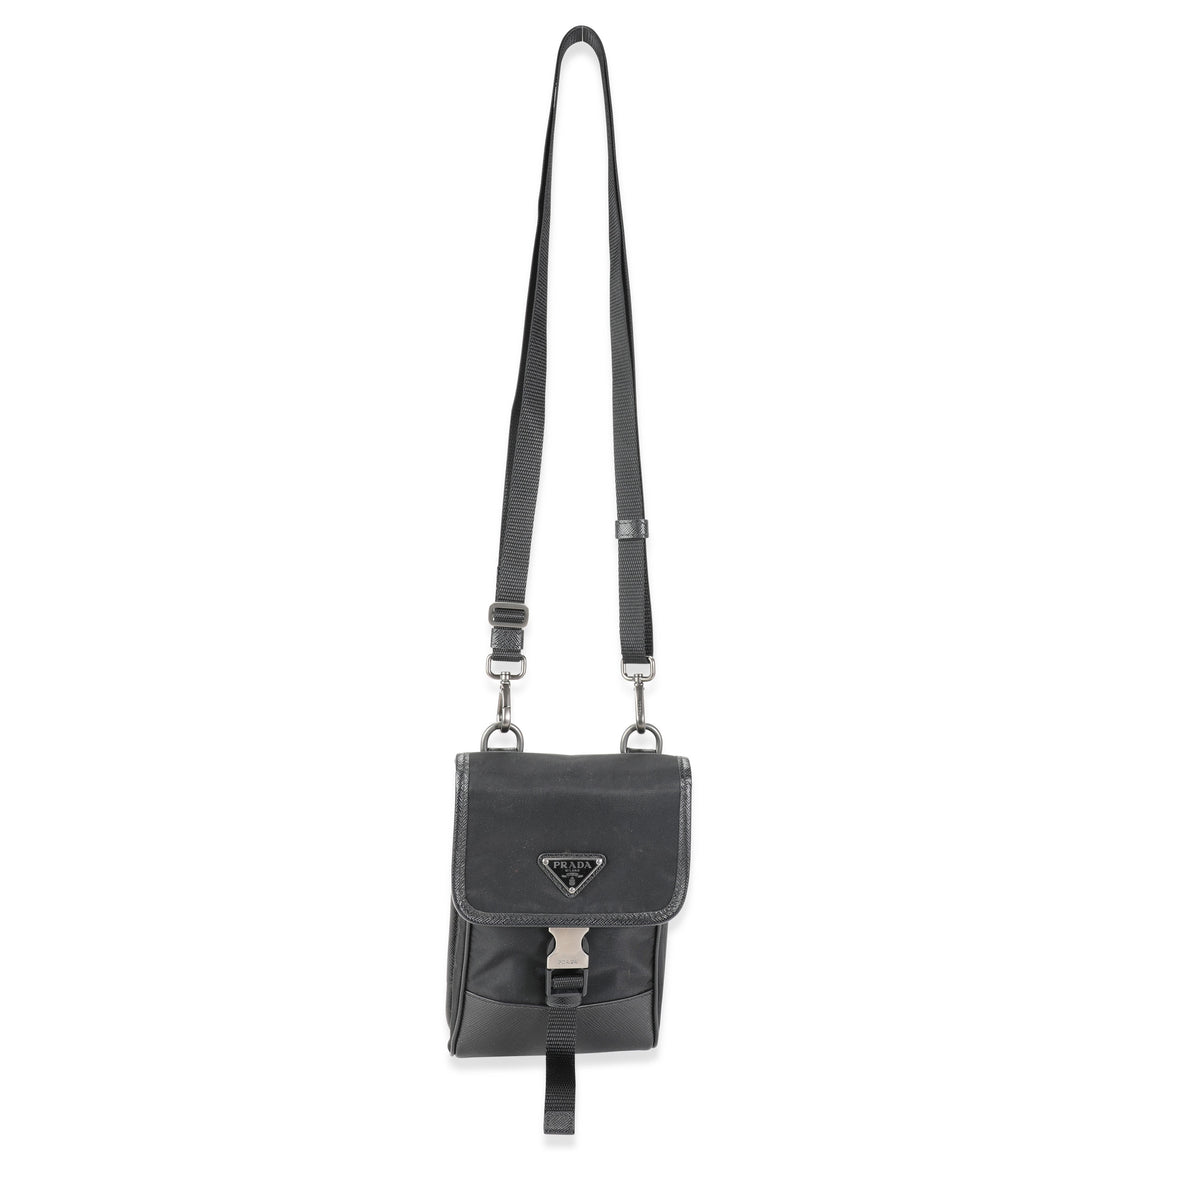 BALENCIAGA: mobile phone bag in saffiano leather with logo - Black